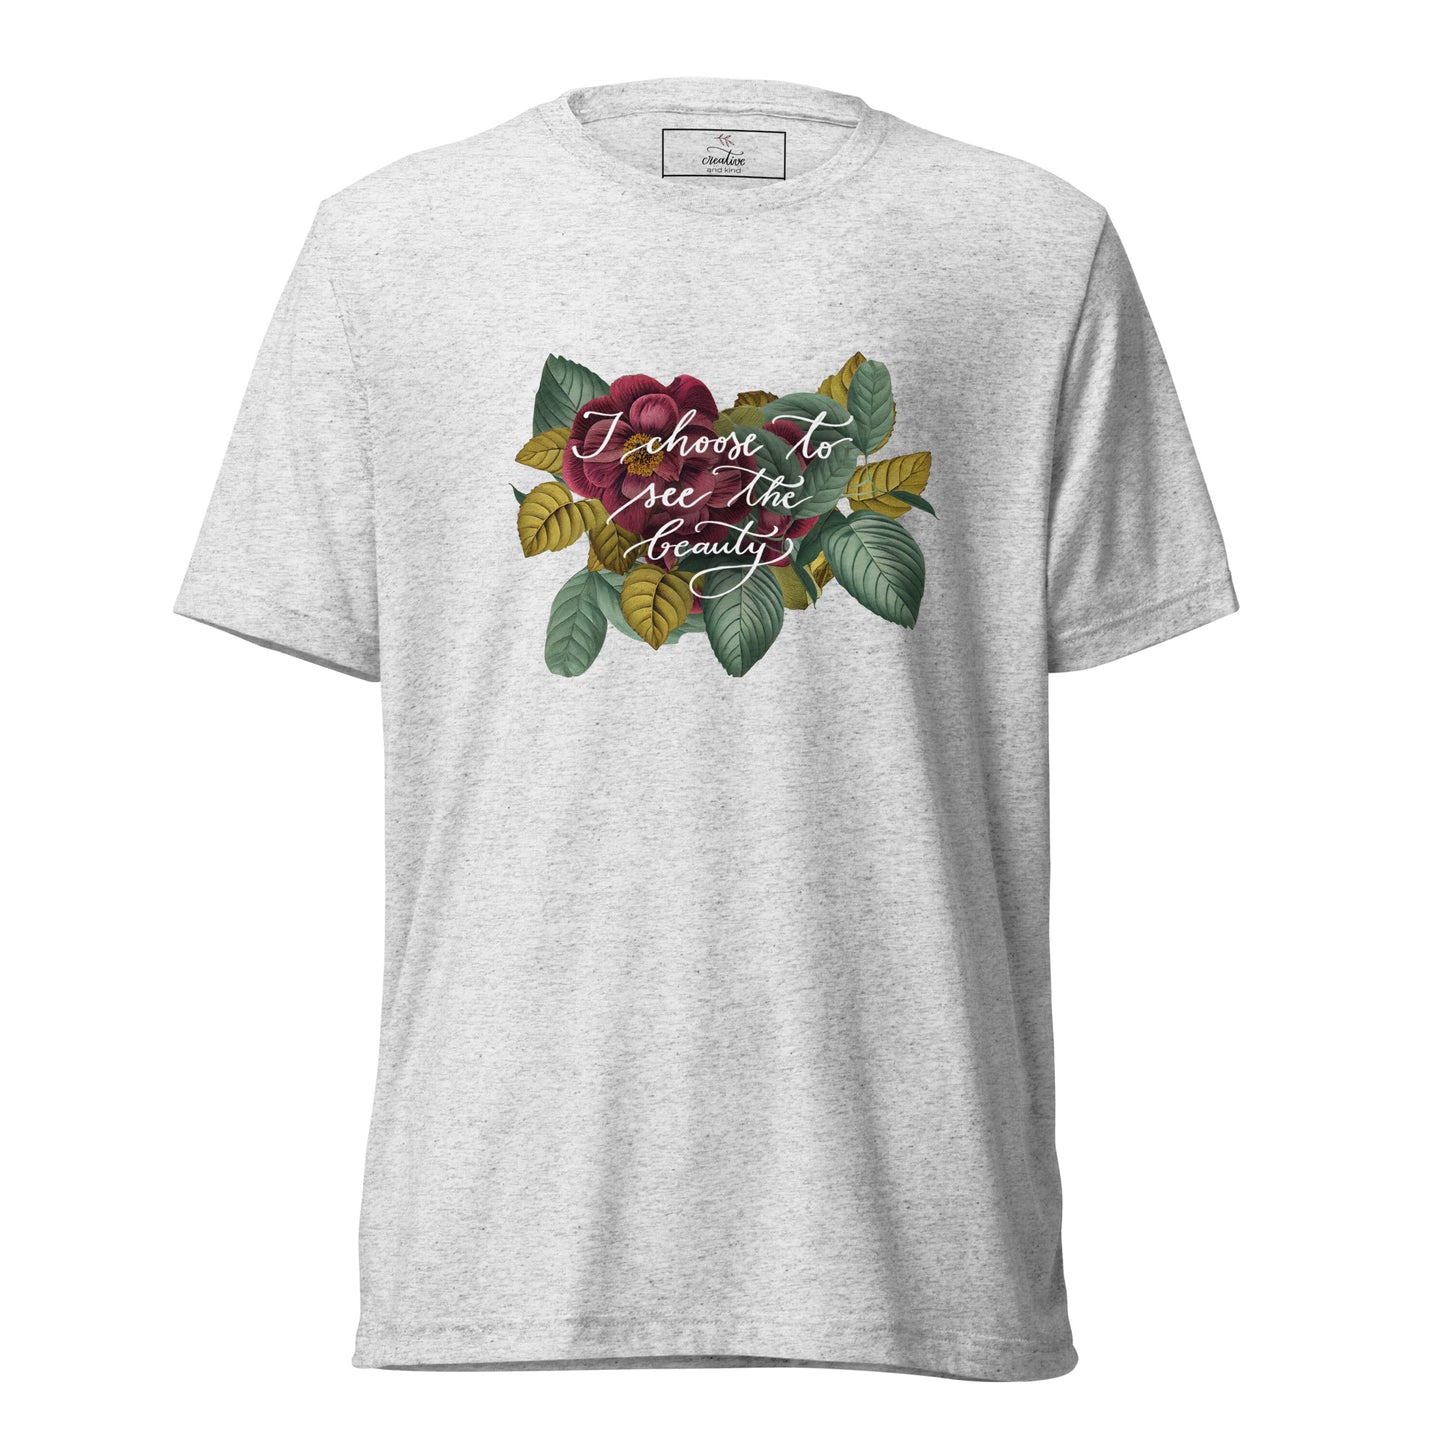 Short sleeve t-shirt "I choose - vintage flowers"